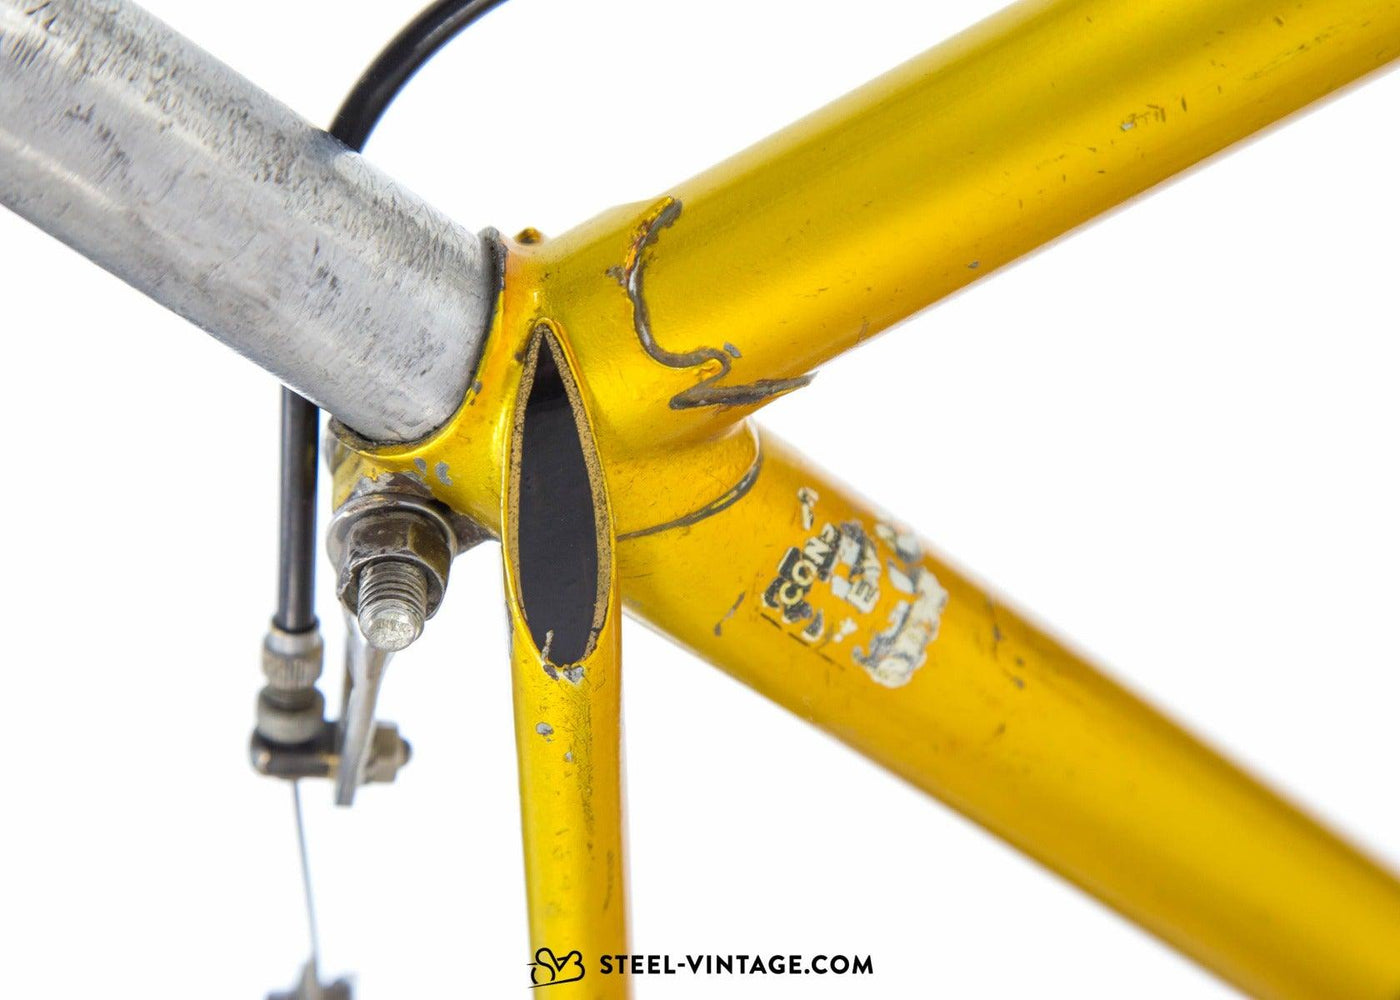 Motobecane Grand Jubilé Classic Road Bicycle 1970s - Steel Vintage Bikes